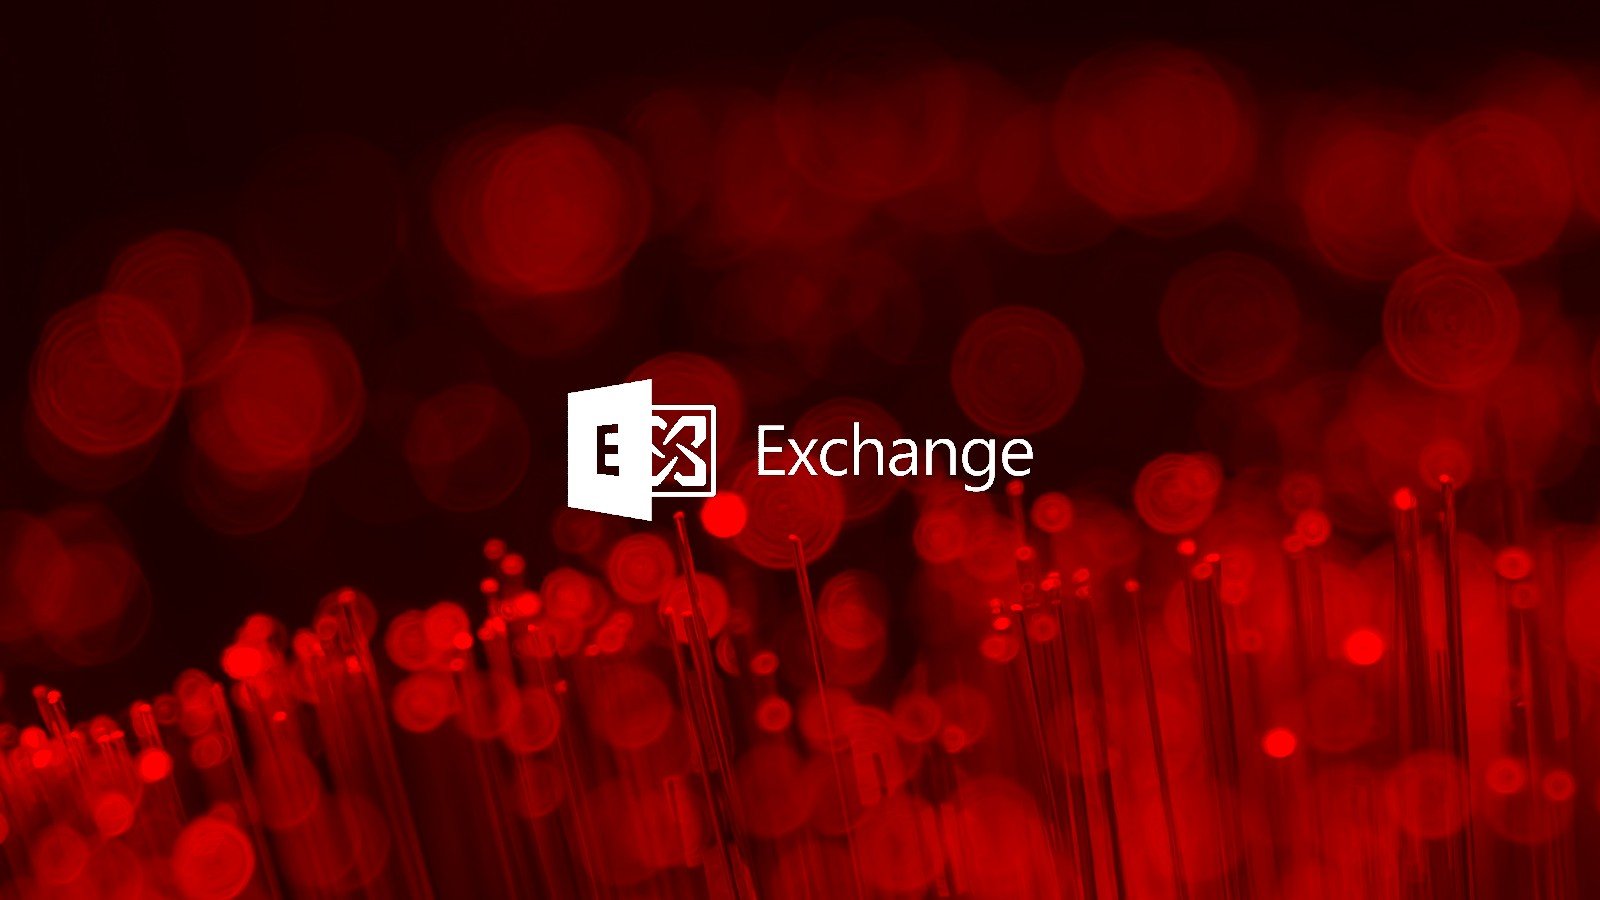 New Microsoft Exchange zero-days actively exploited in attacks